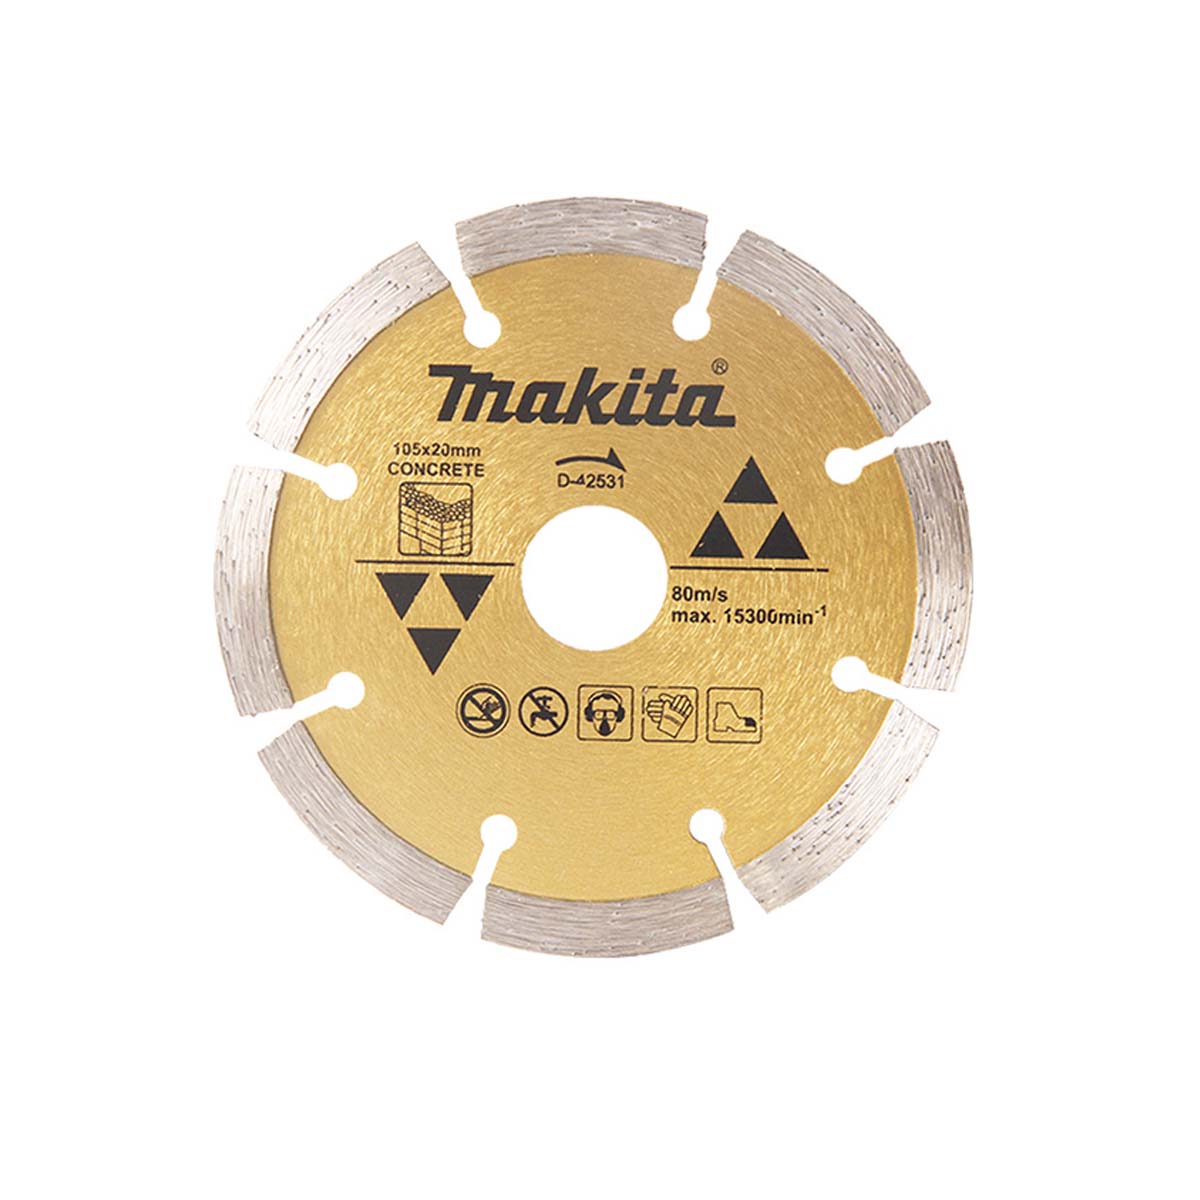 Makita D-42531 Diamond Wheel 105mm (For Concrete)